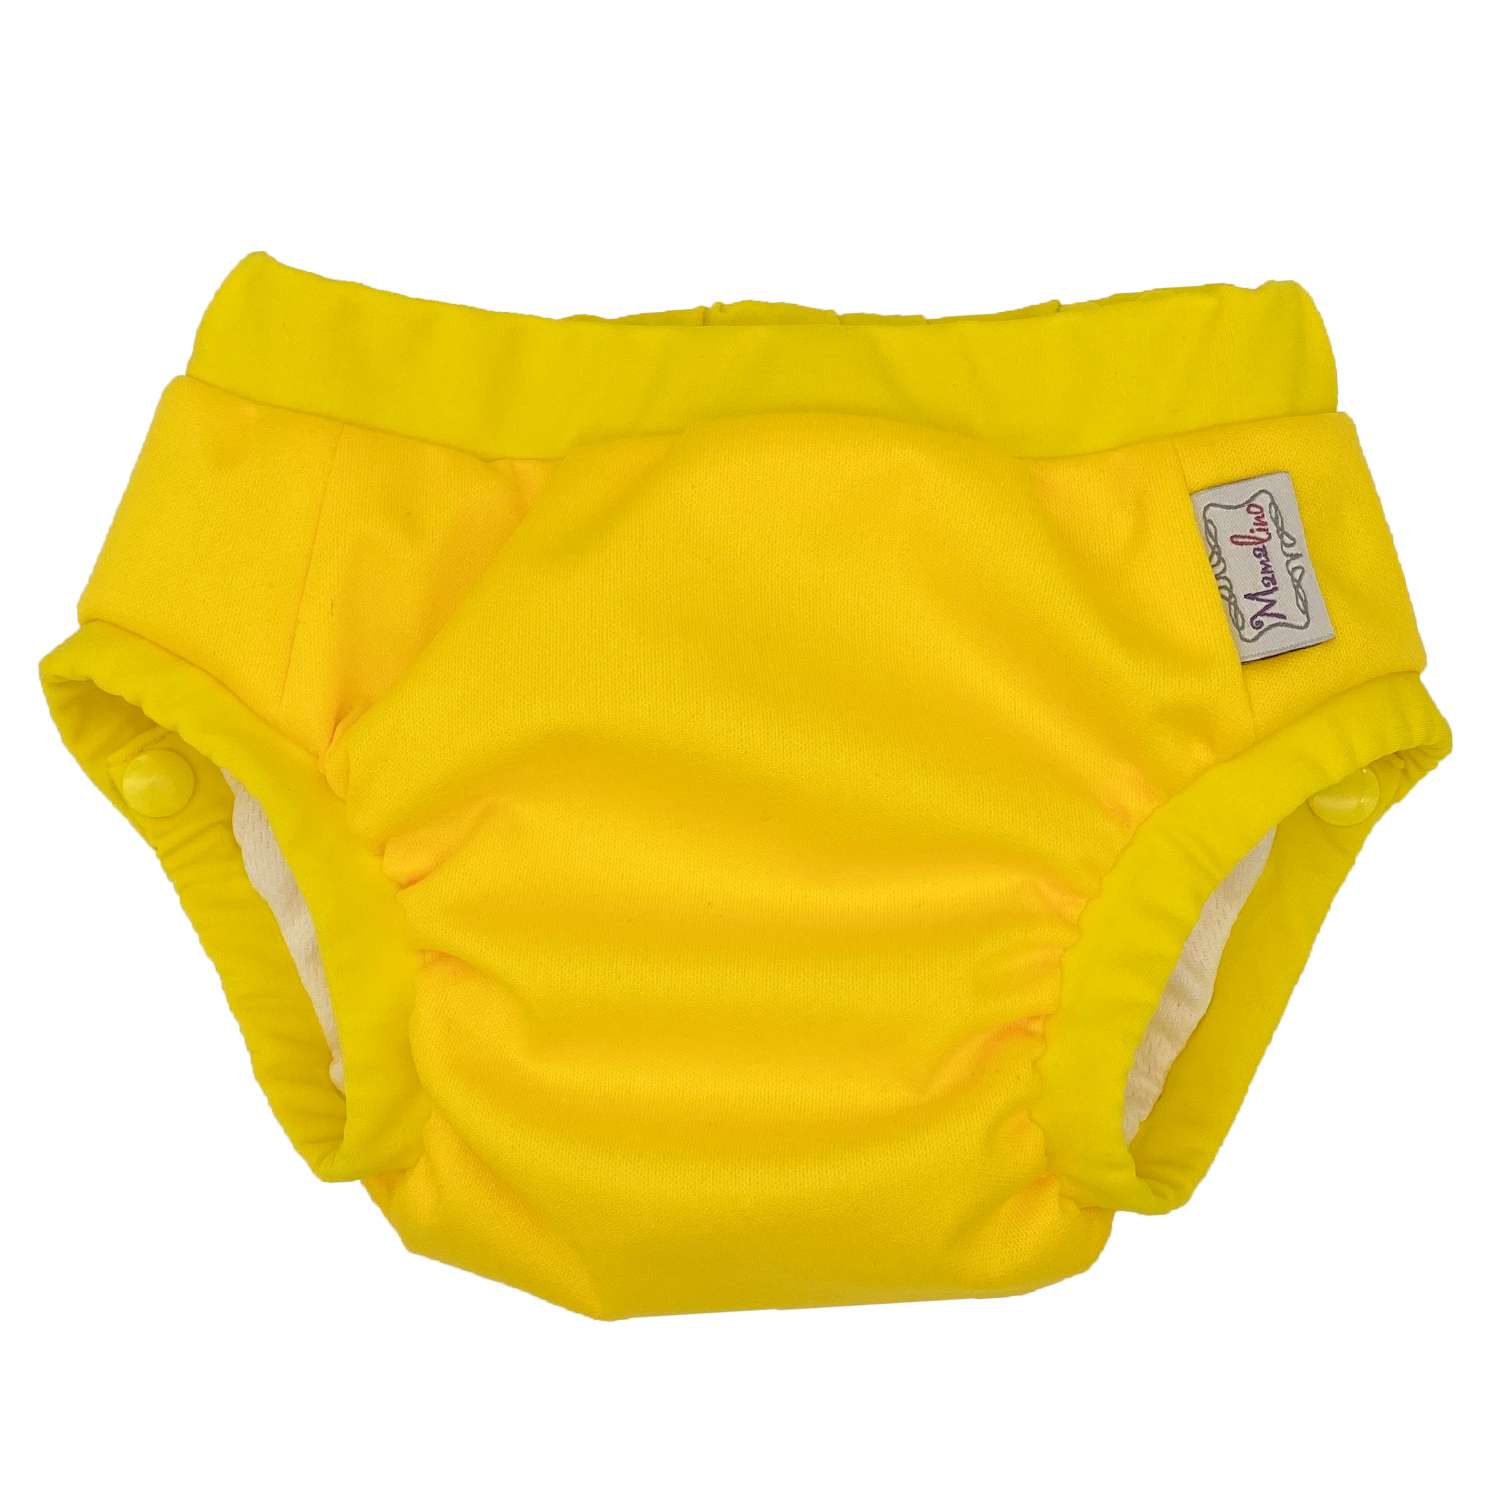 Трусики для плавания Mamalino многоразовые желтые размер L 10-18 кг - фото 1